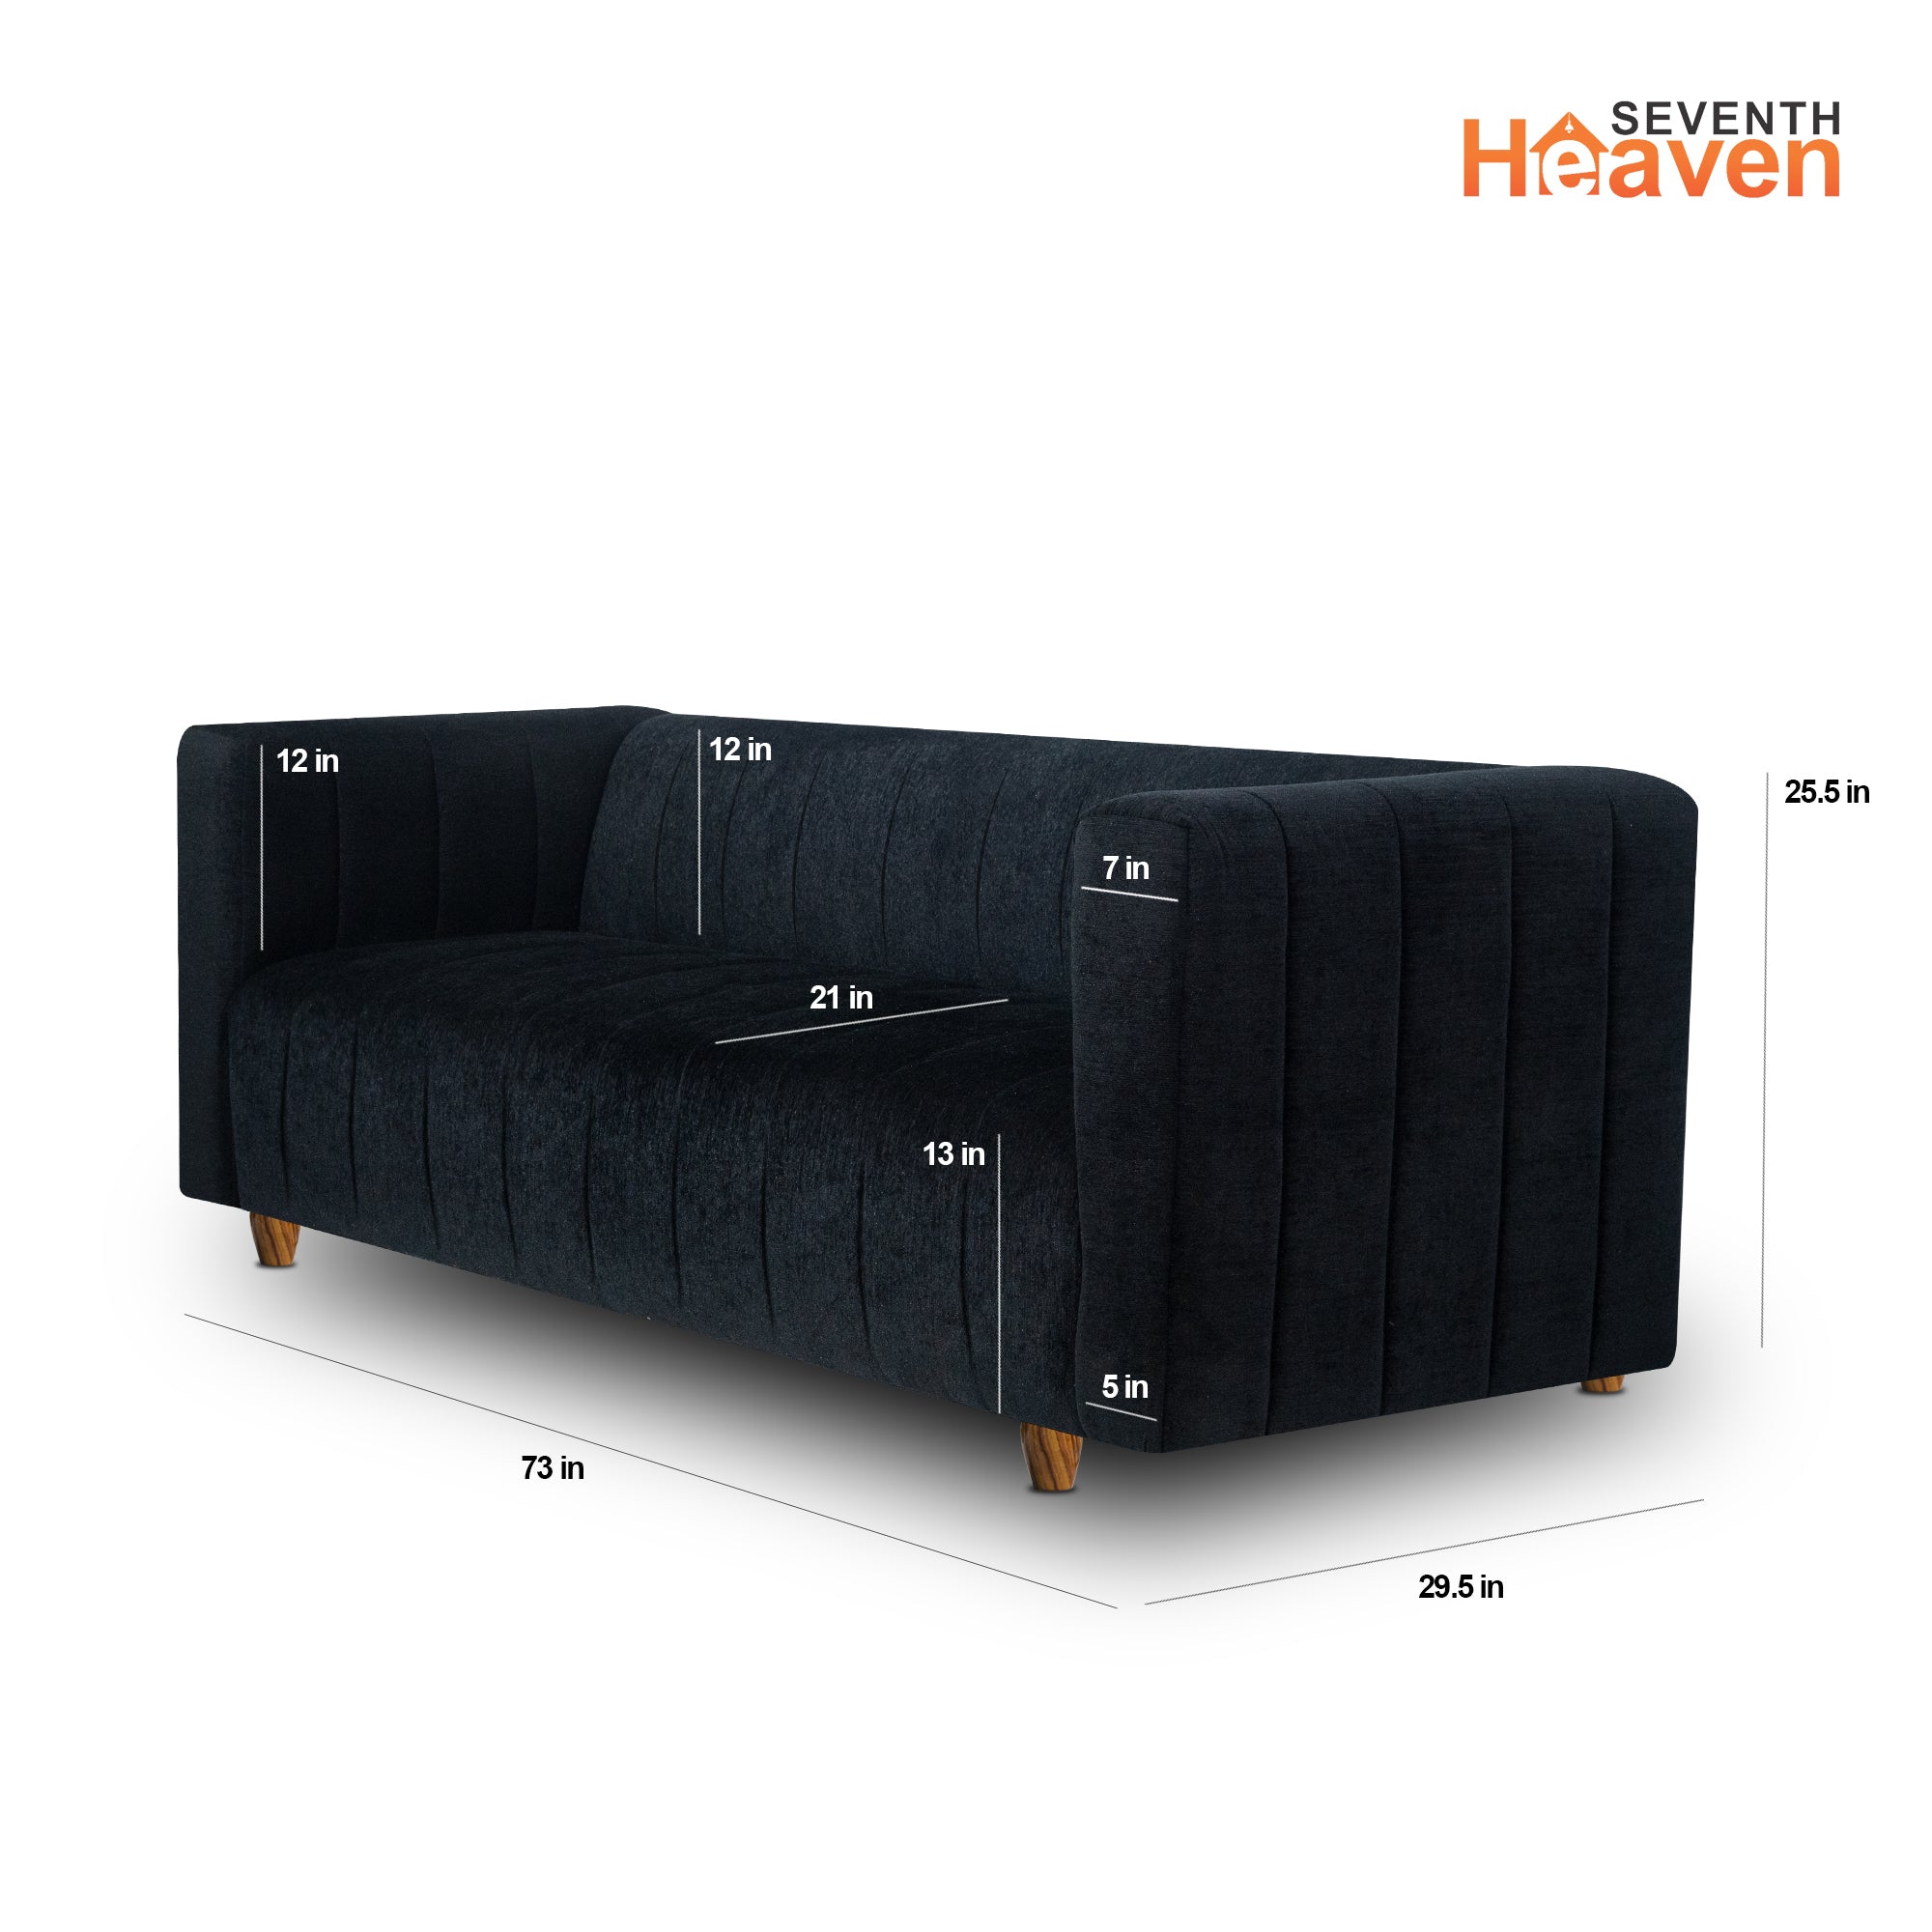 Seventh Heaven Tokyo 3 Seater Sofa, Extra Spacious, Chenille Molfino Fabric: 3 Year Warranty Fabric 3 Seater Sofa Black  (Finish Color -, DIY(Do-It-Yourself)